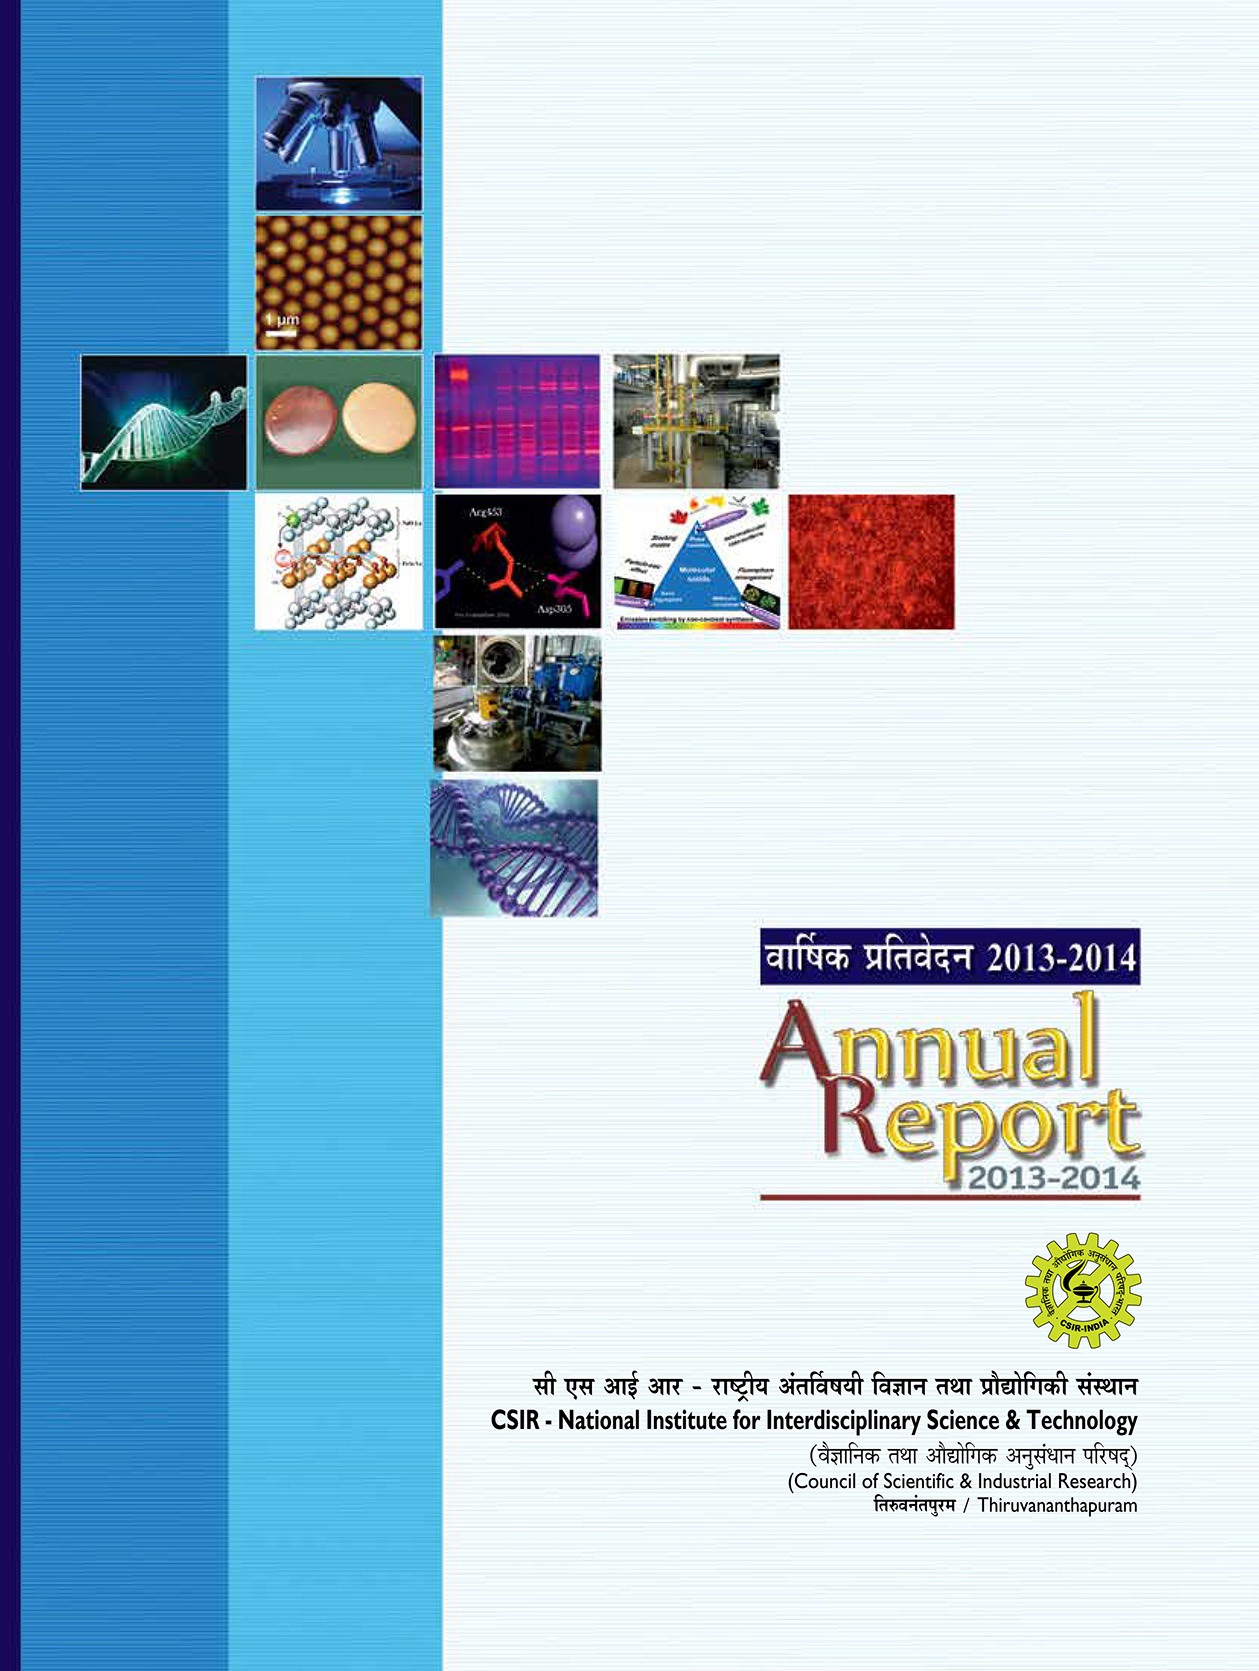  Annual Report 2013 - 2014